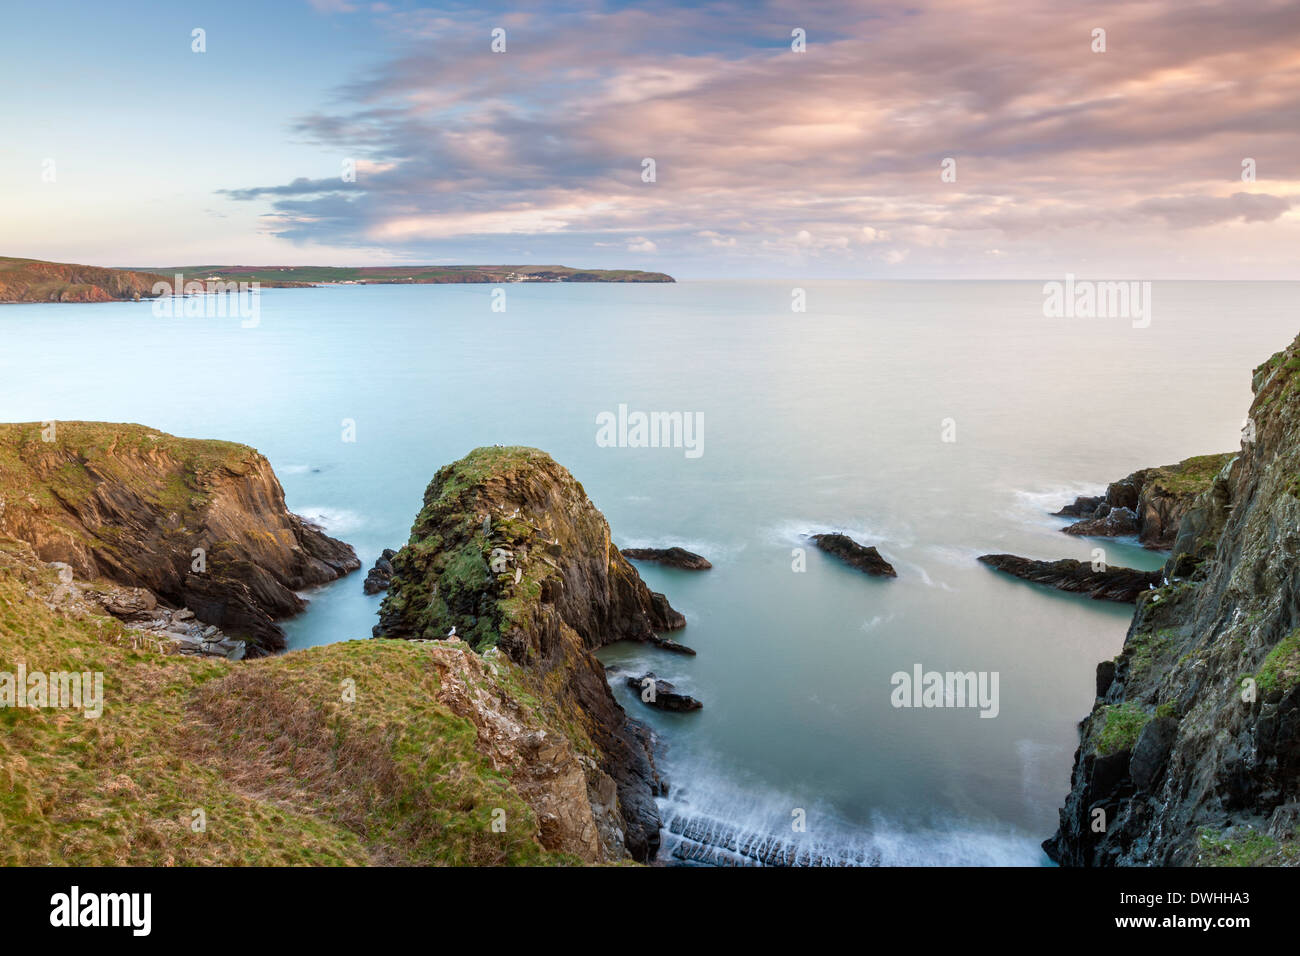 Burgh Island, Bigbury-on-Sea, South Hams, Devon, England, Europe. Stock Photo